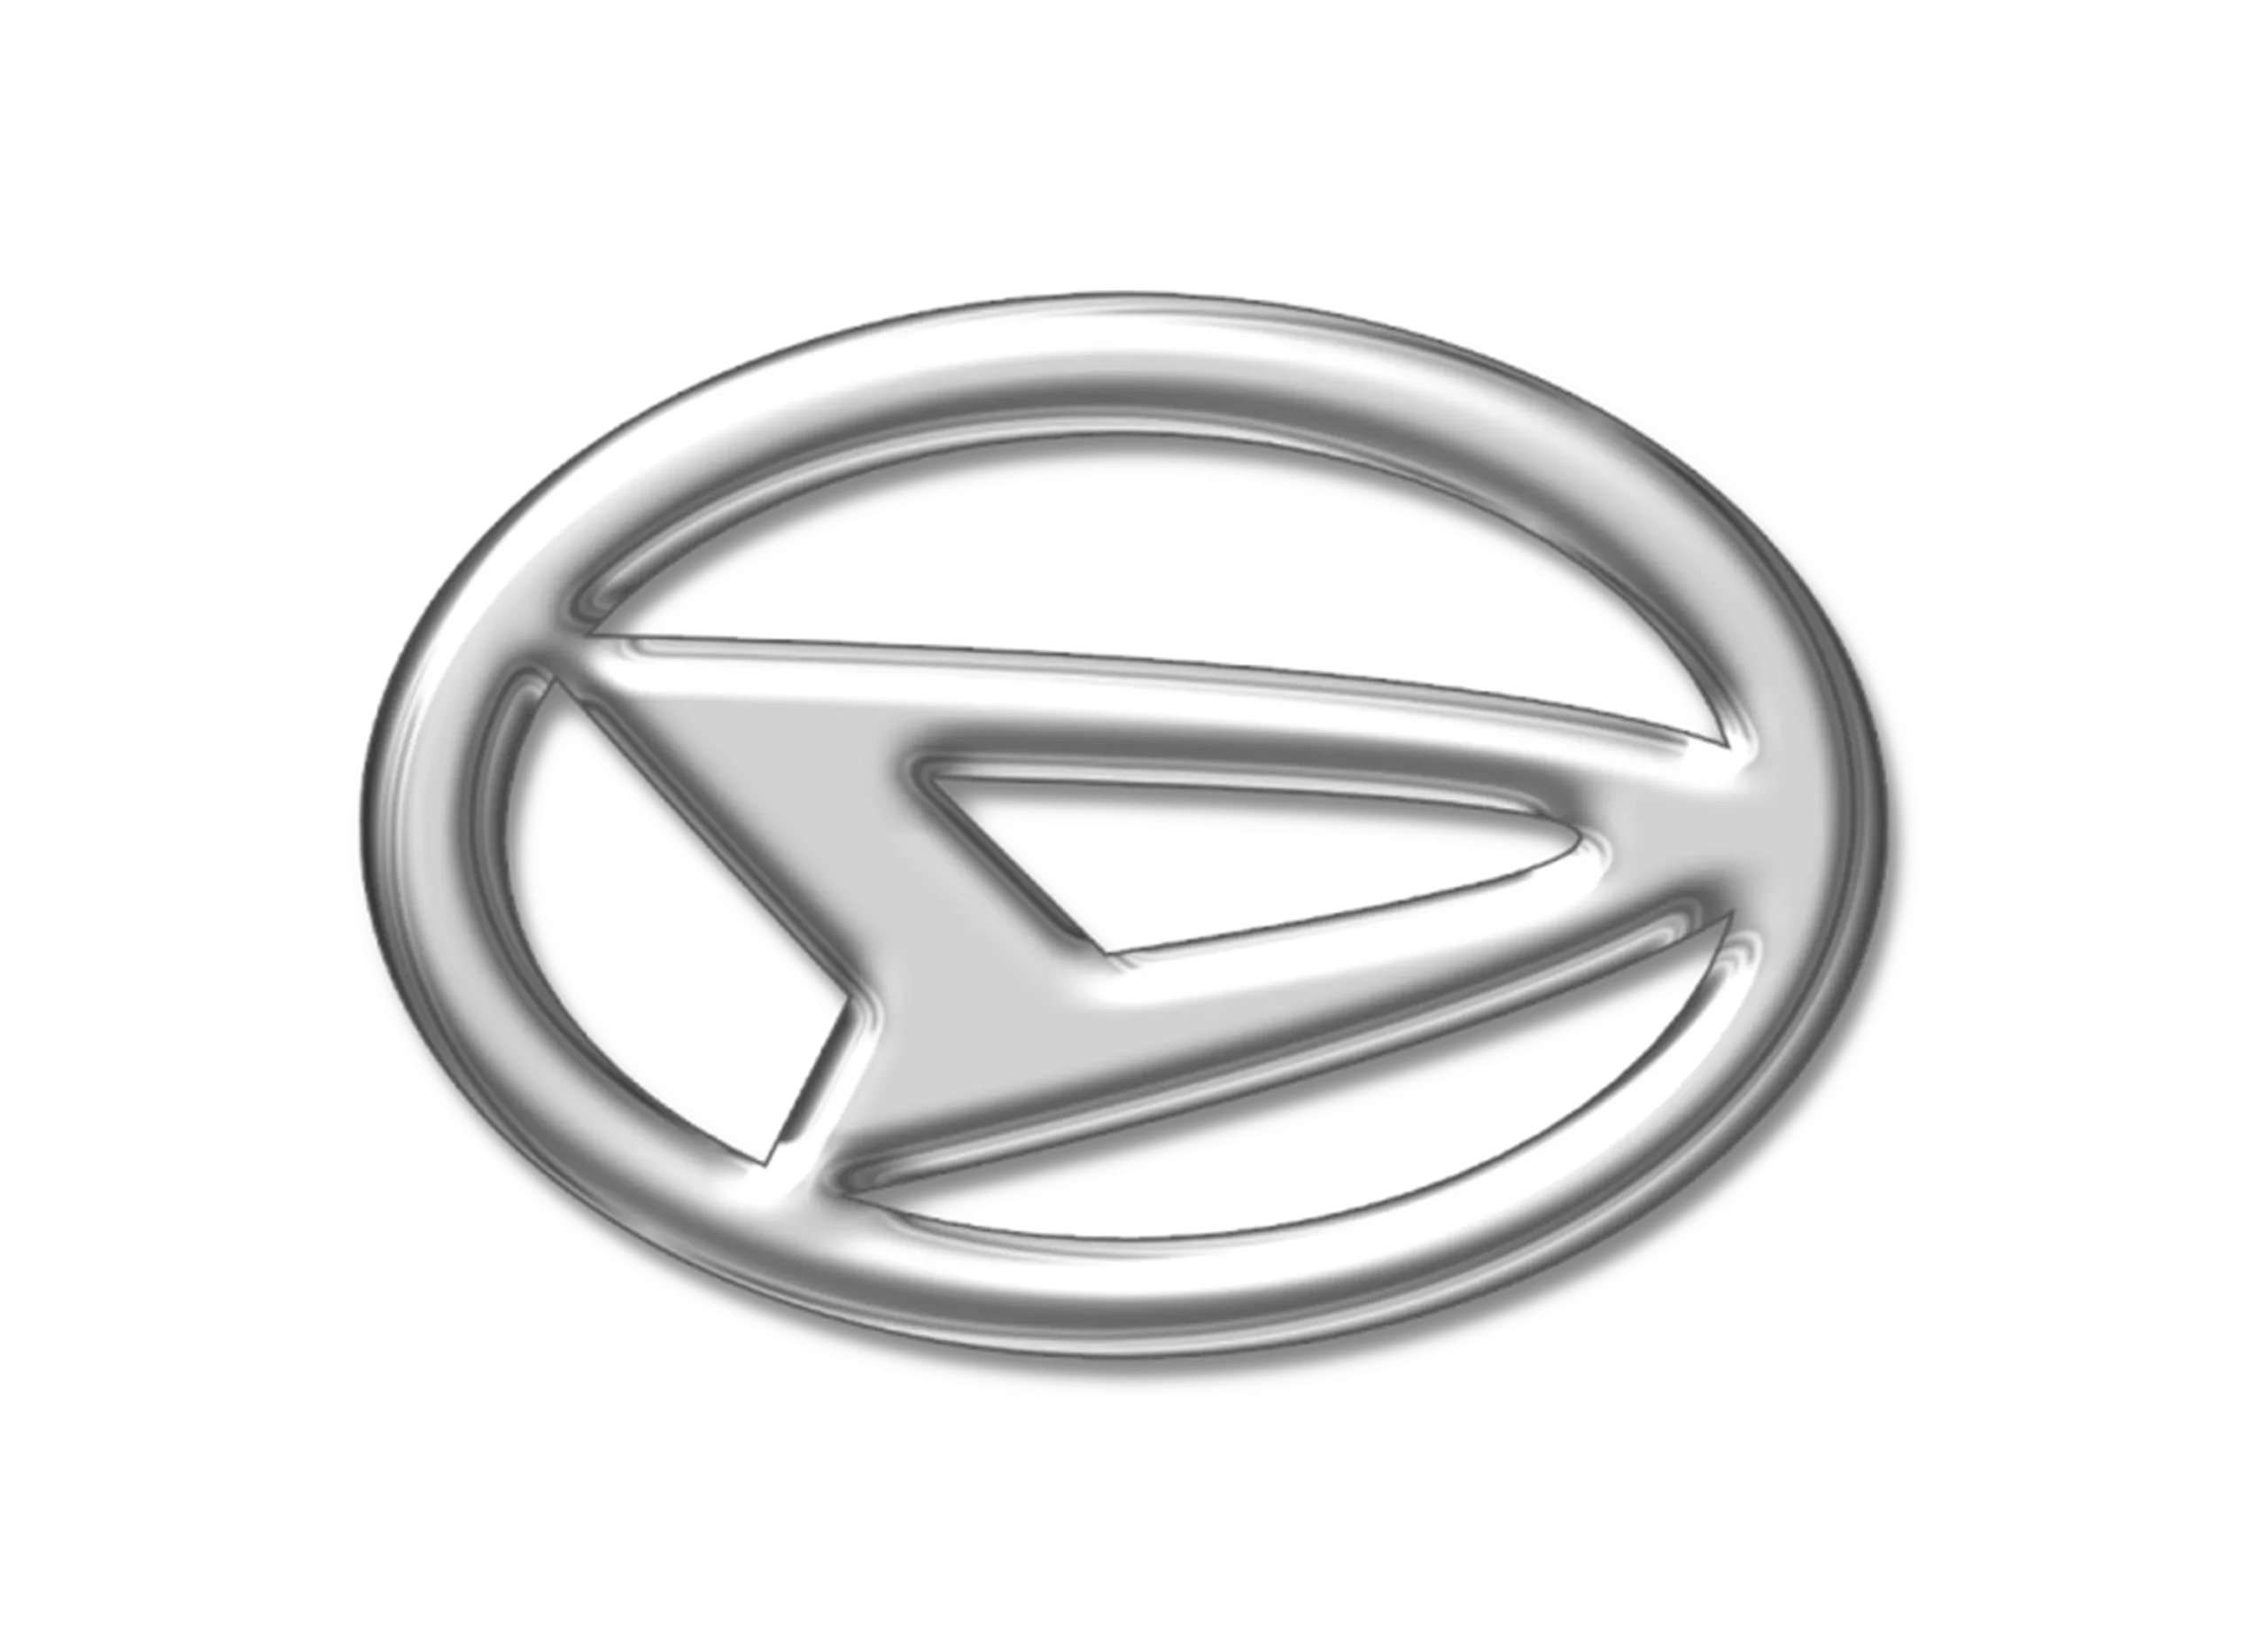 Datsun symbol